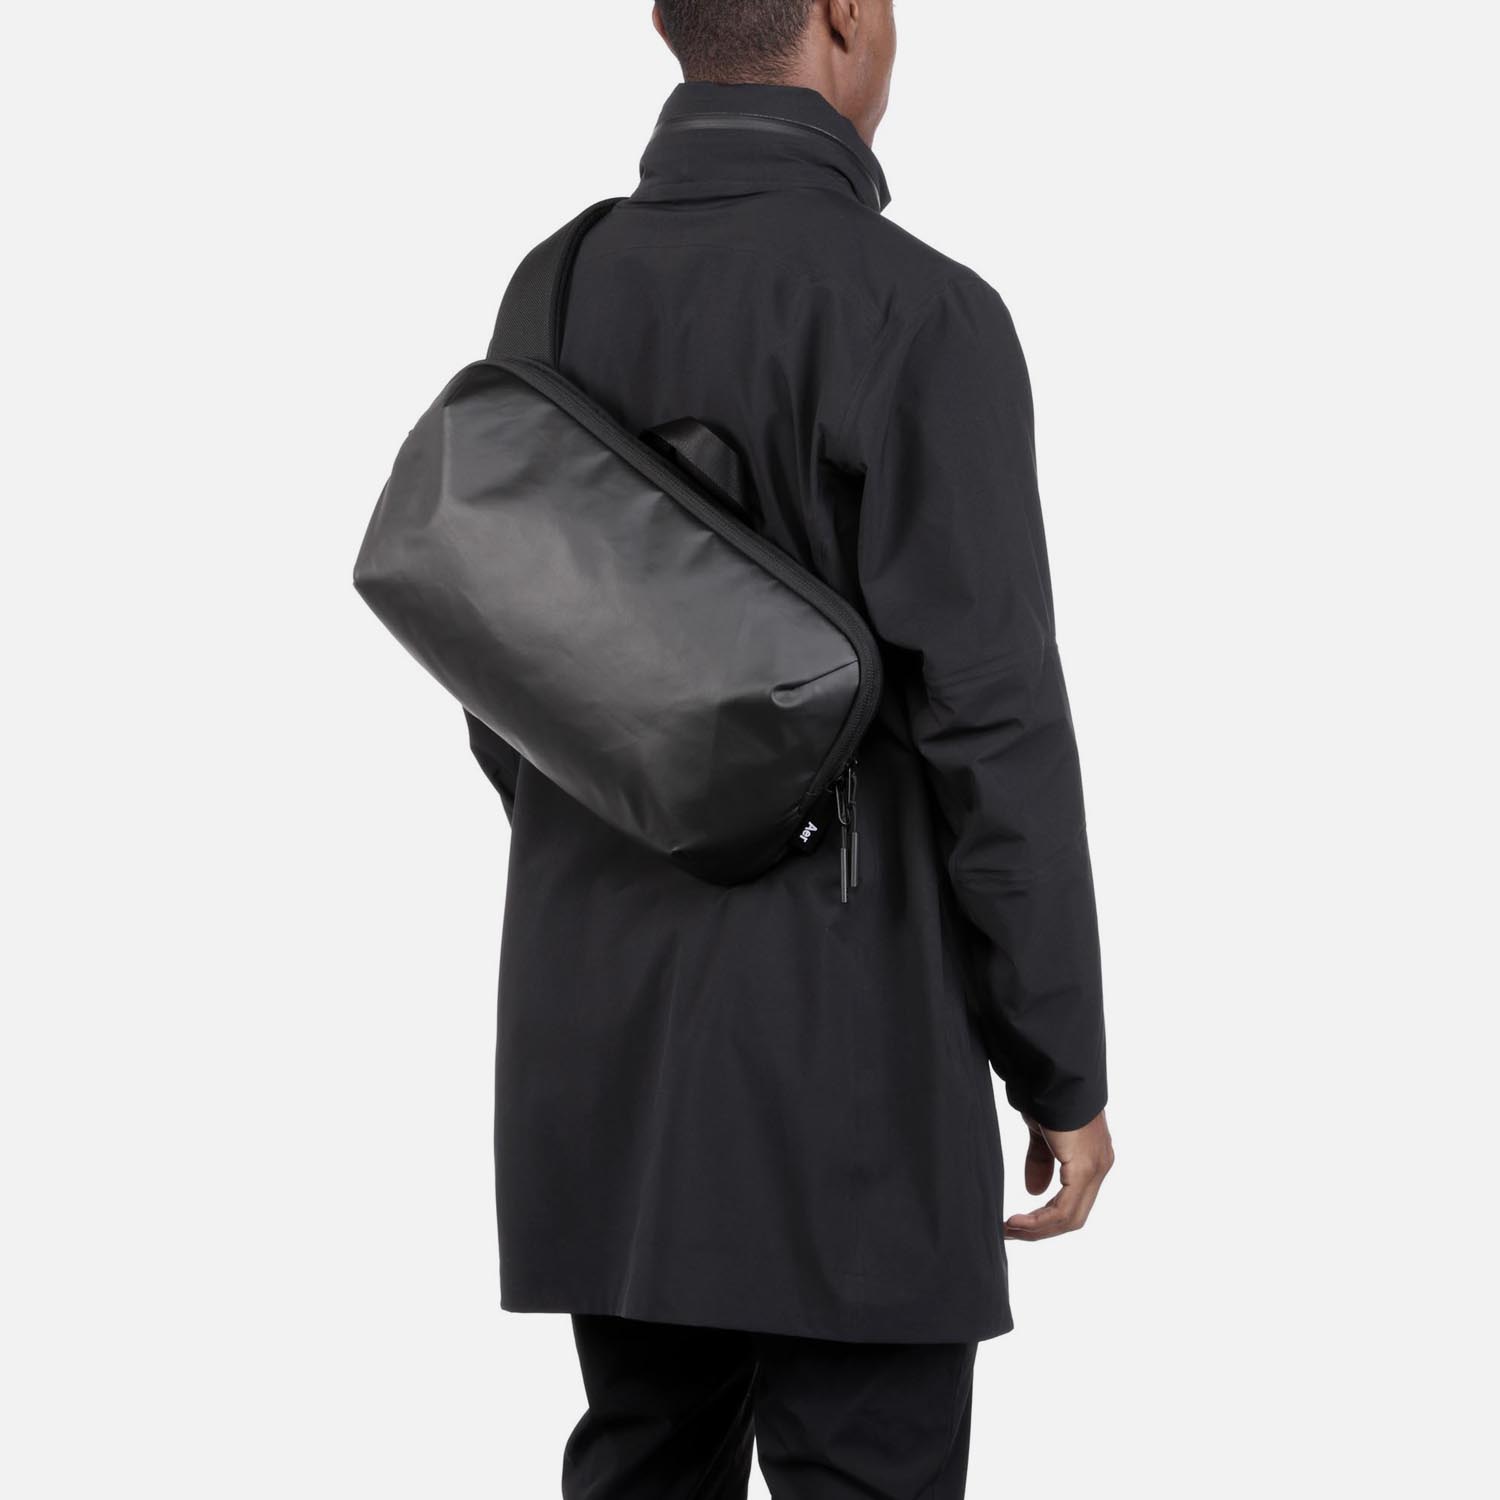 Tech Sling - Black — Aer | Modern gym bags, travel backpacks and 